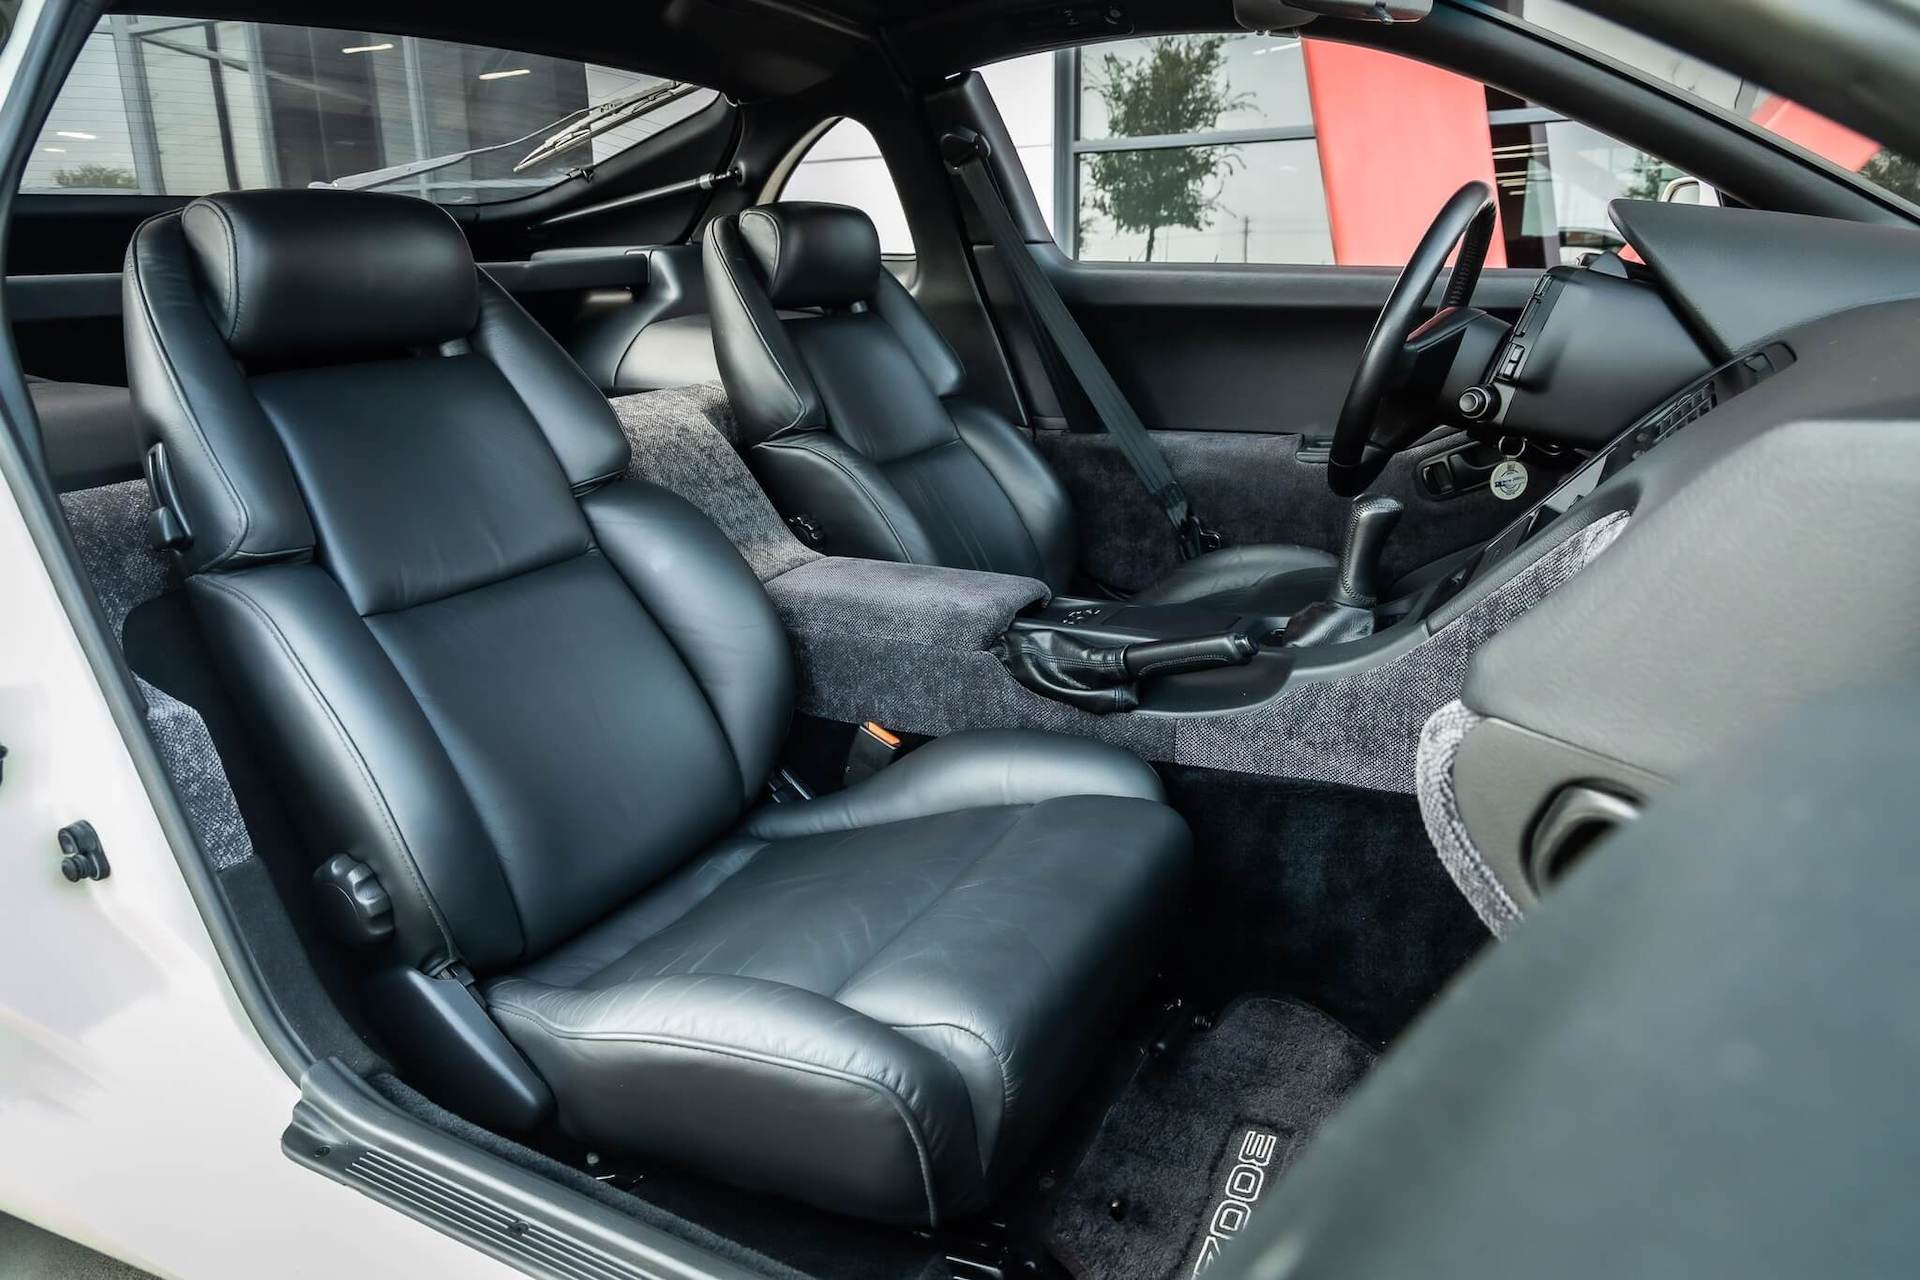 Nissan 300 ZX interior - Seats